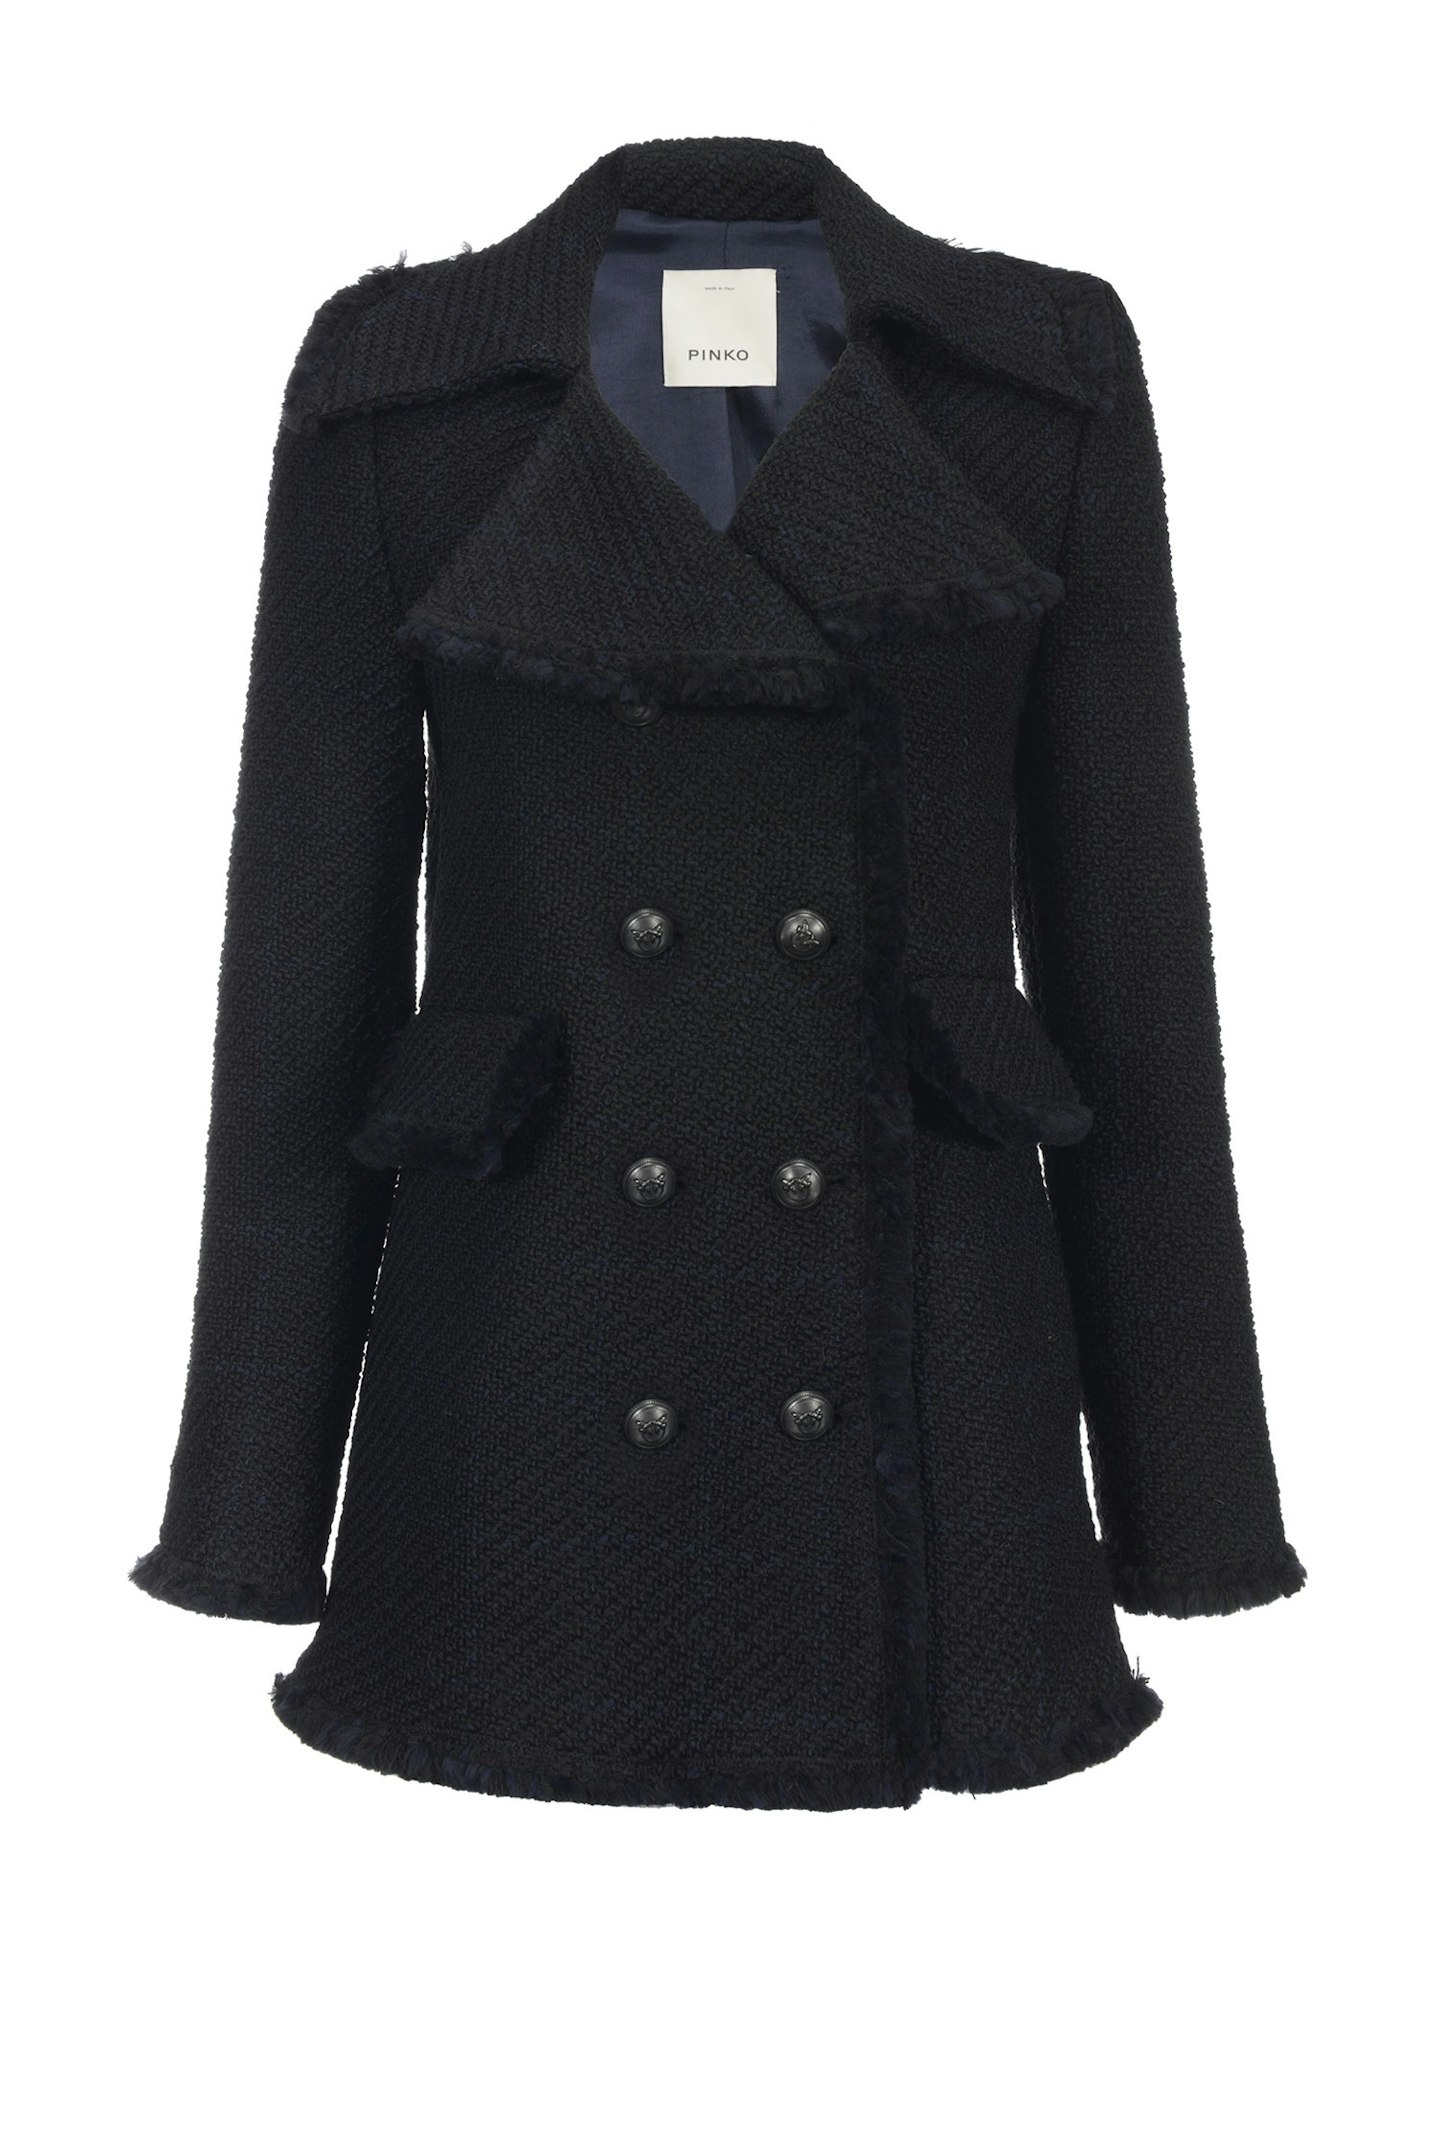 Pinko, Tweed Coat With Frayed Edges, £485